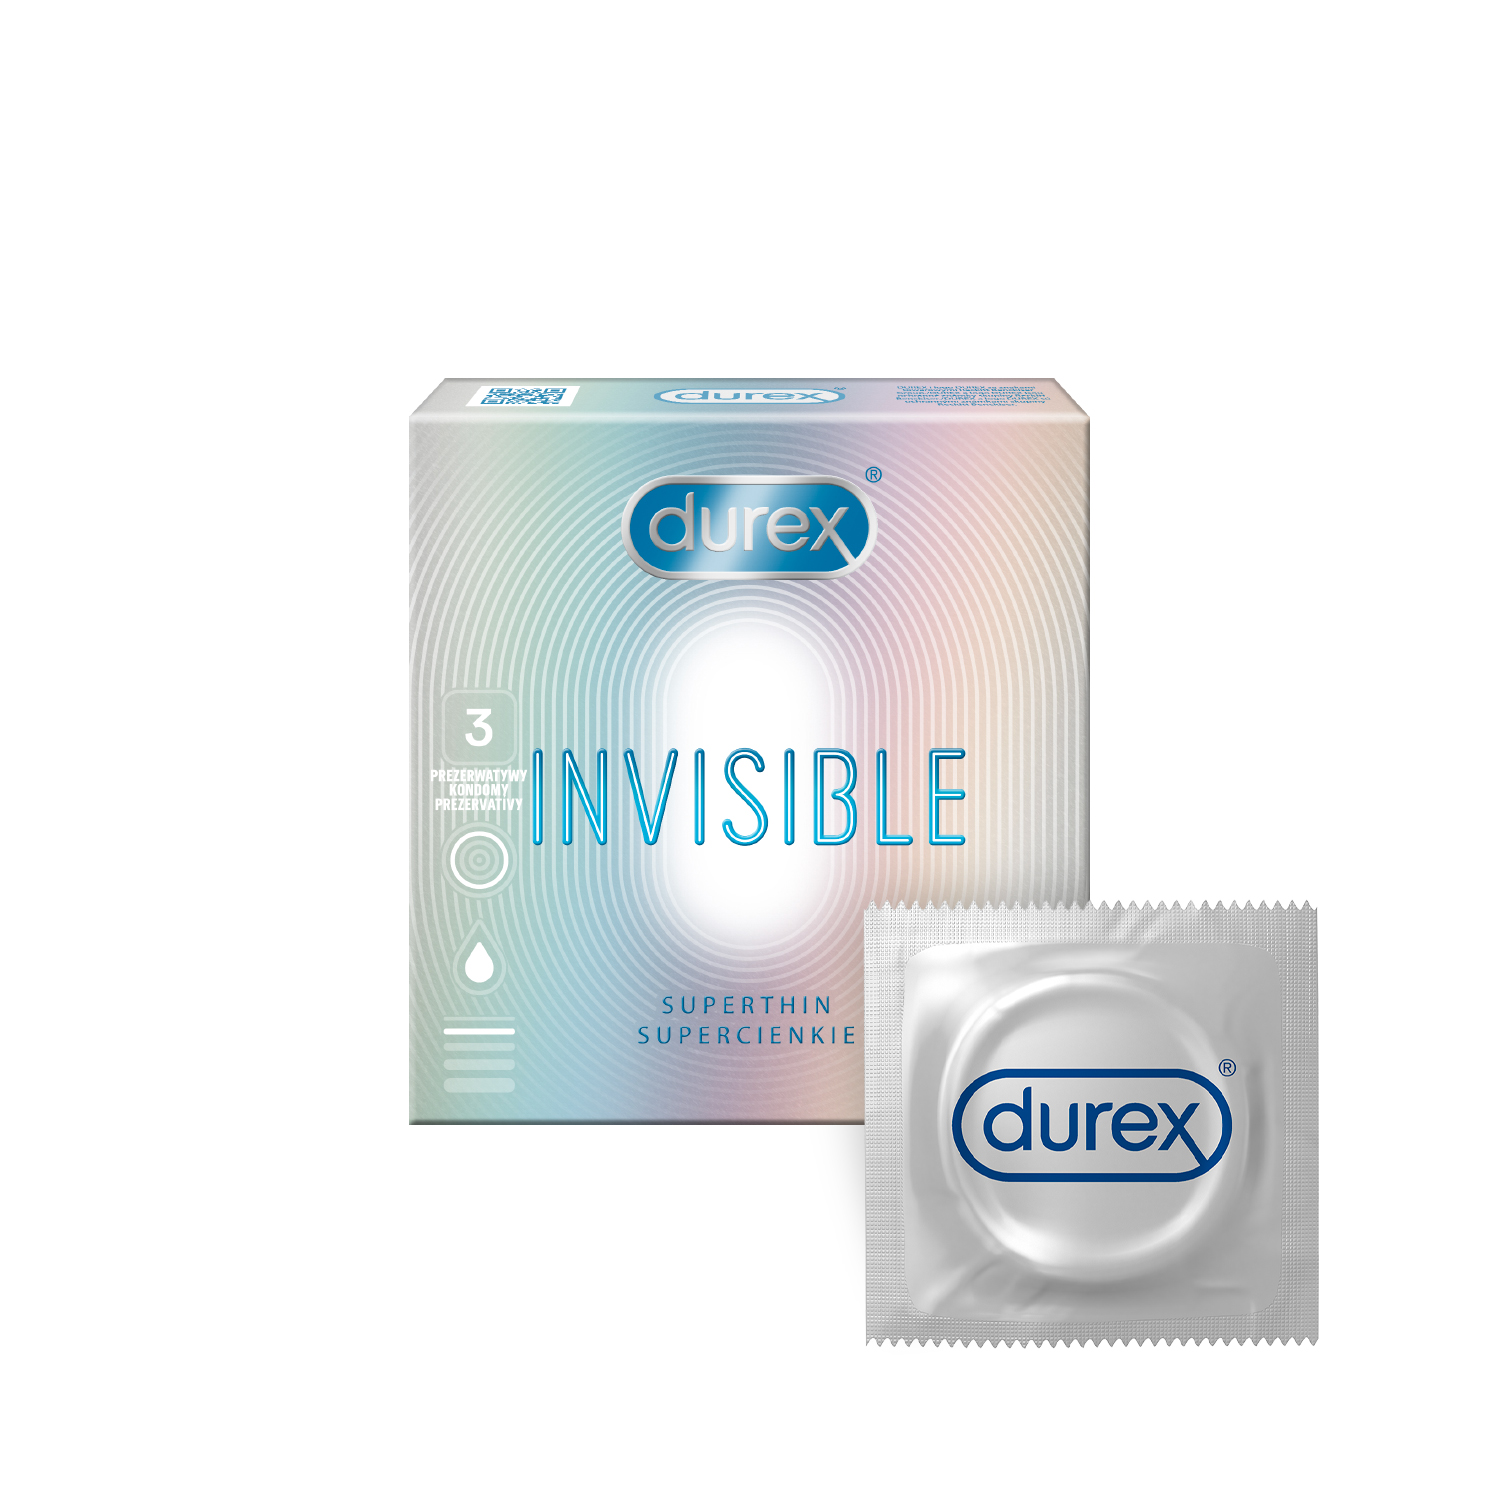 E-shop Durex Invisible Superthin (Extra Sensitive) krabička 3ks